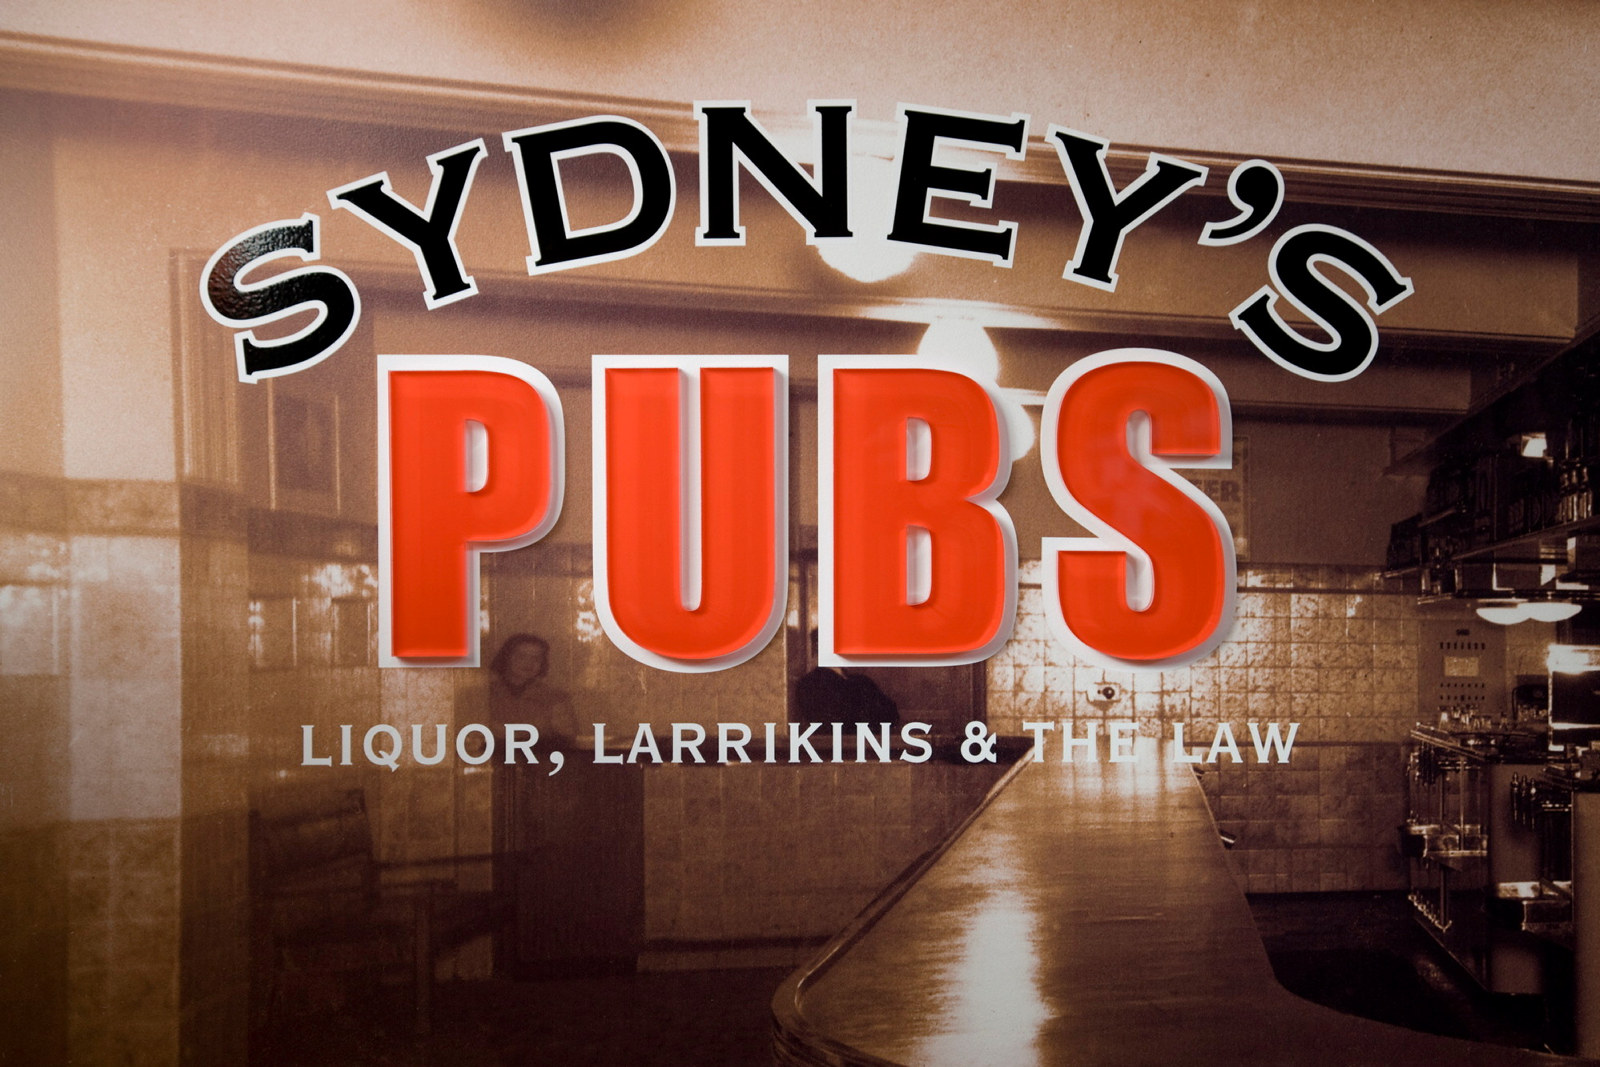 Sydney's pubs: liquor, larrikins & the law installation view